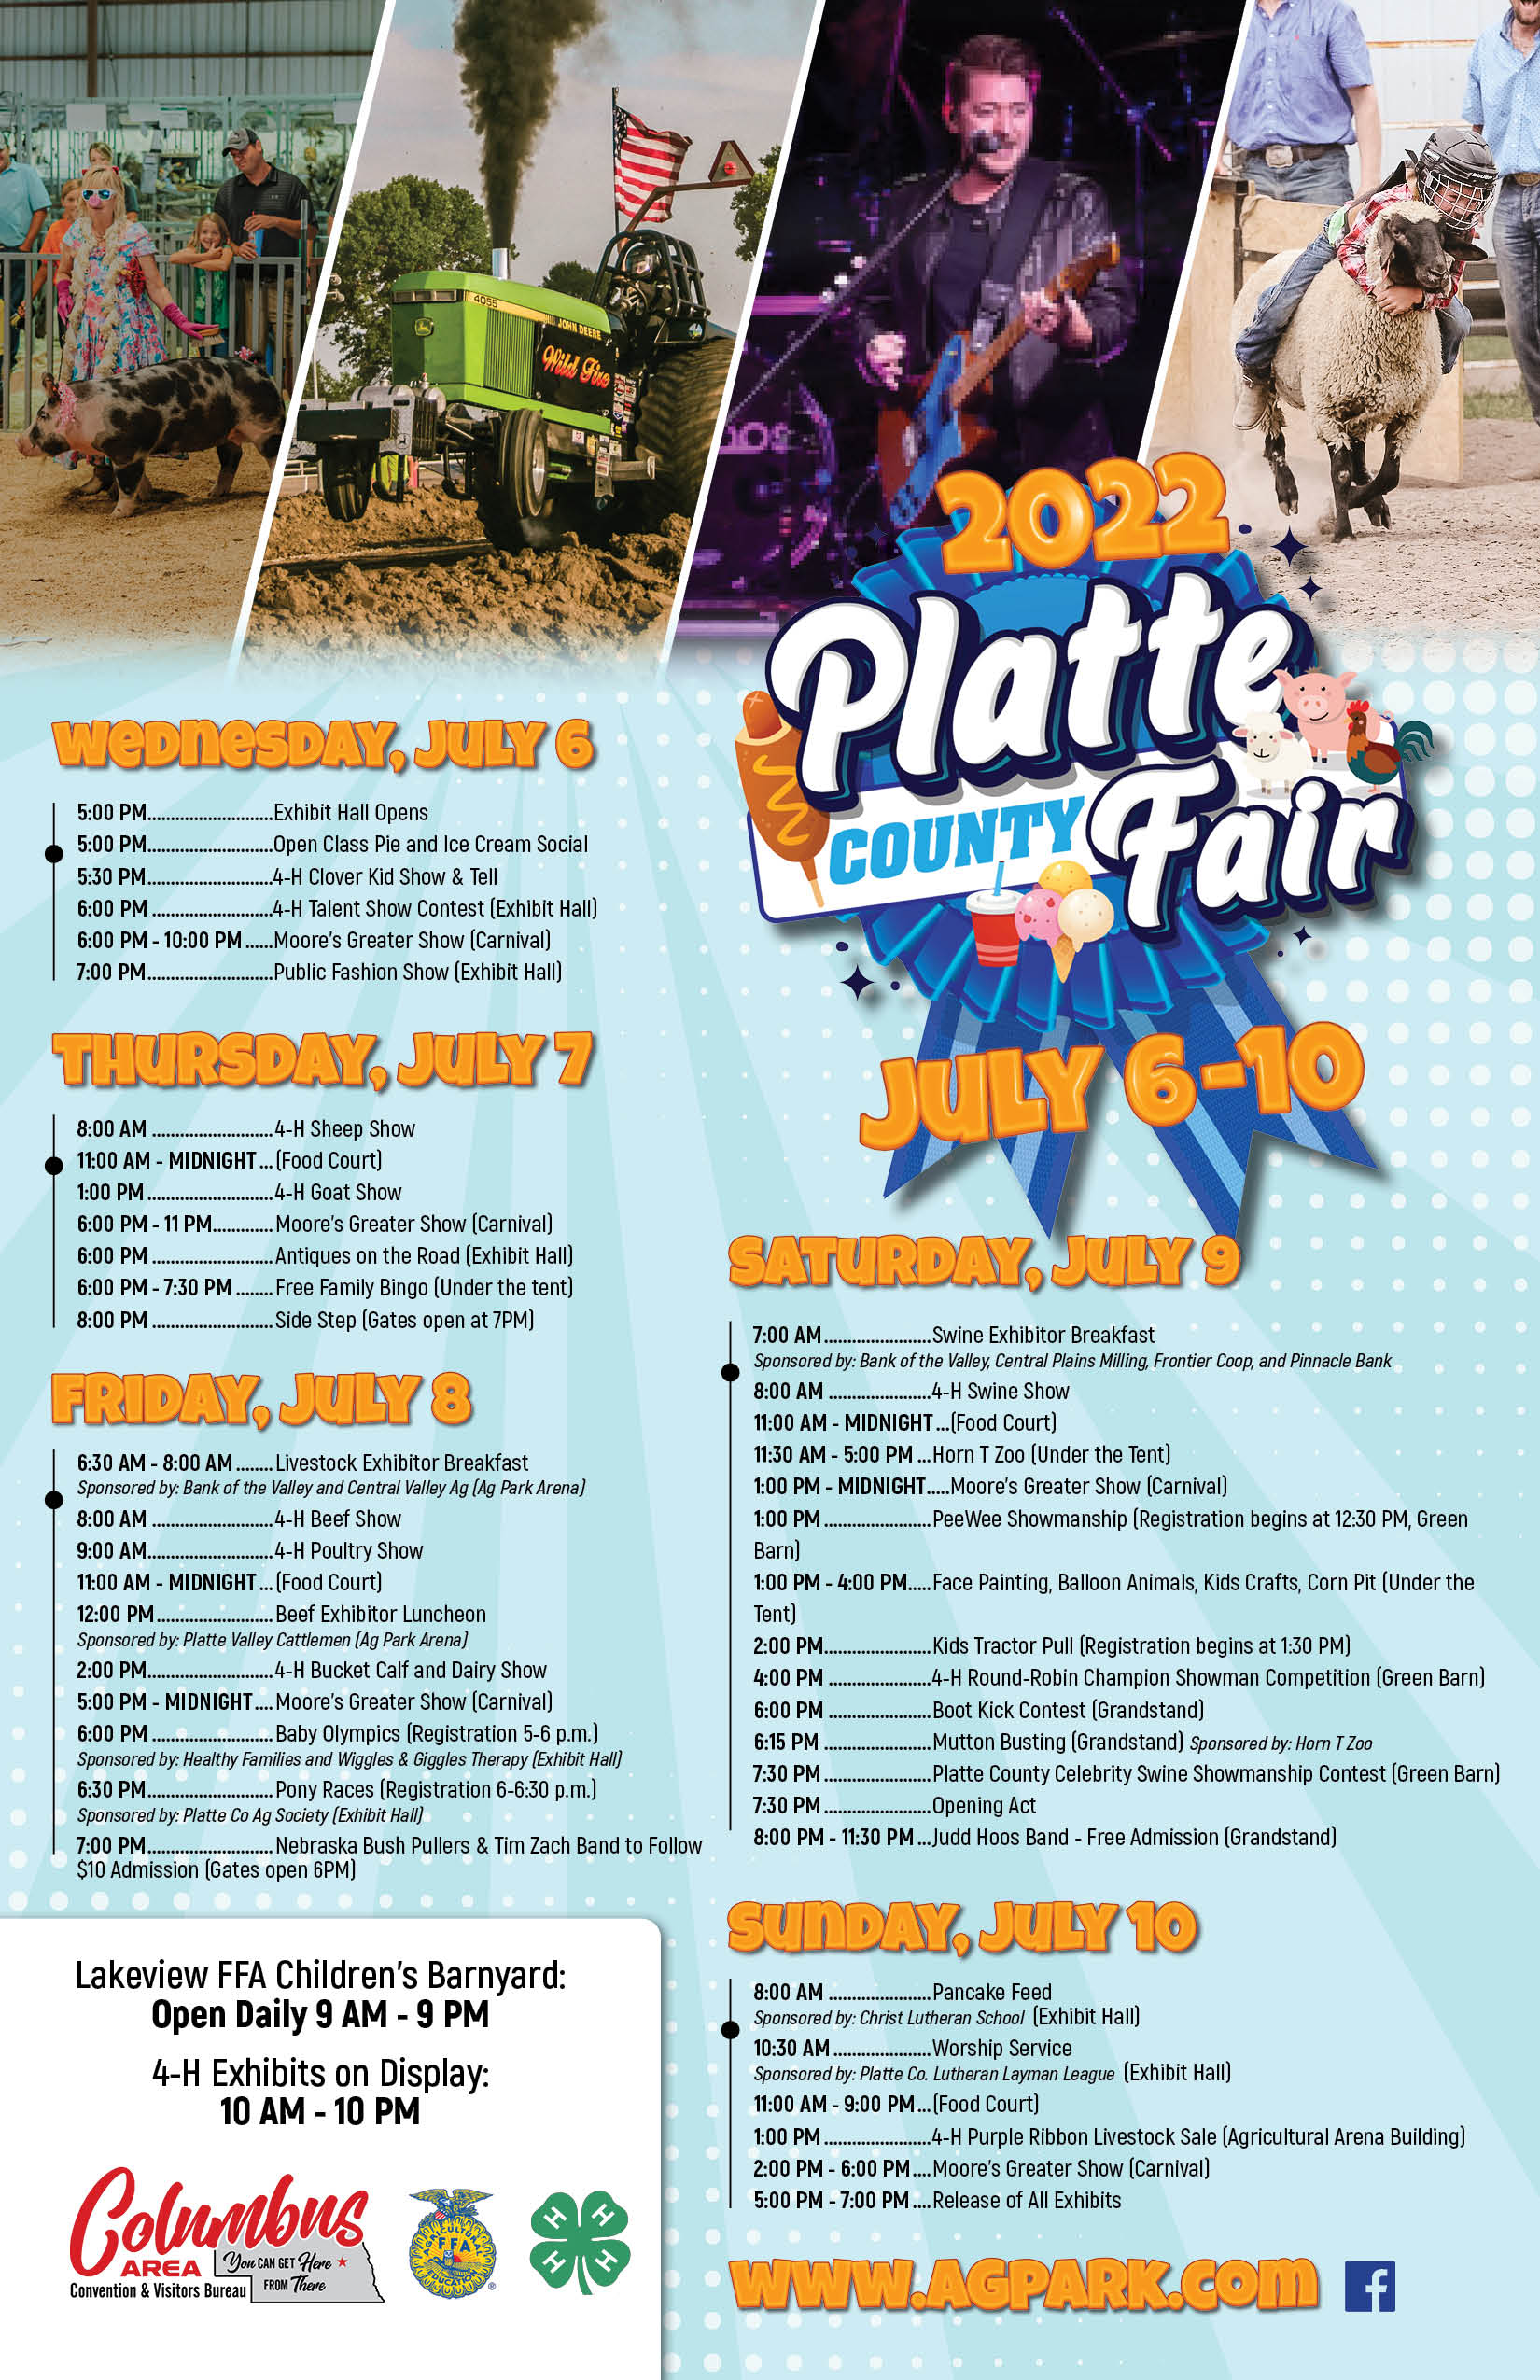 Nebraska Bush Pullers Platte County Fair